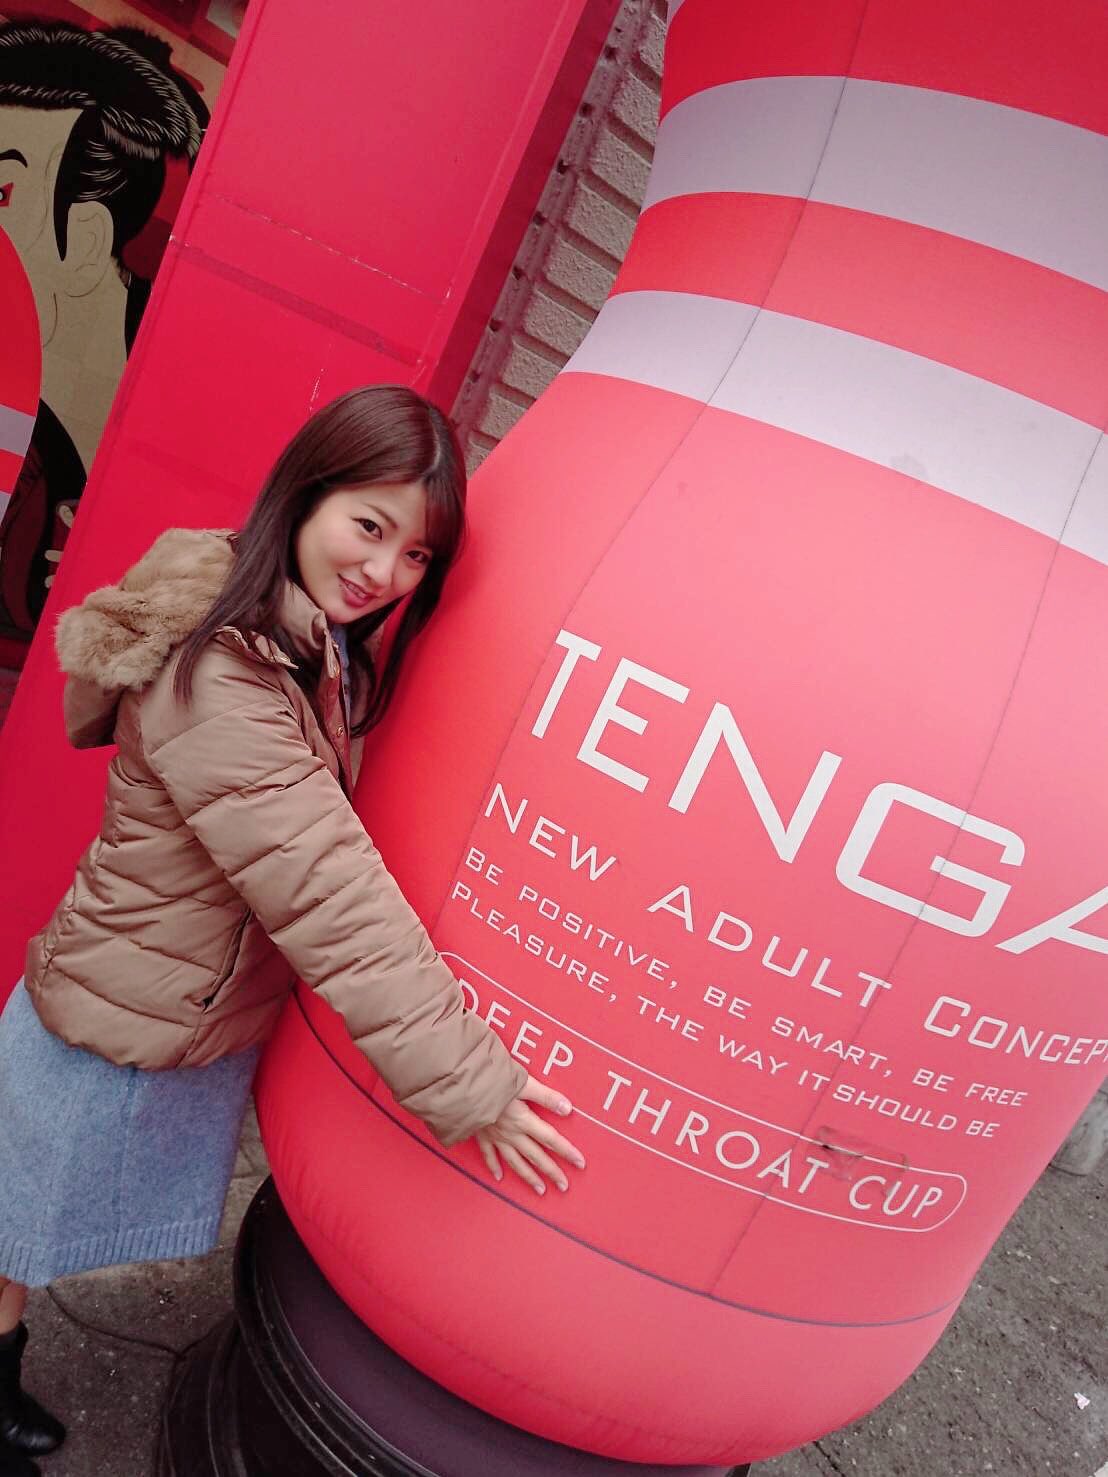 U.S.텐가 오리지널 버큠 컵 스트롱 U.S.TENGA ORIGINAL VACUUM CUP STRONG